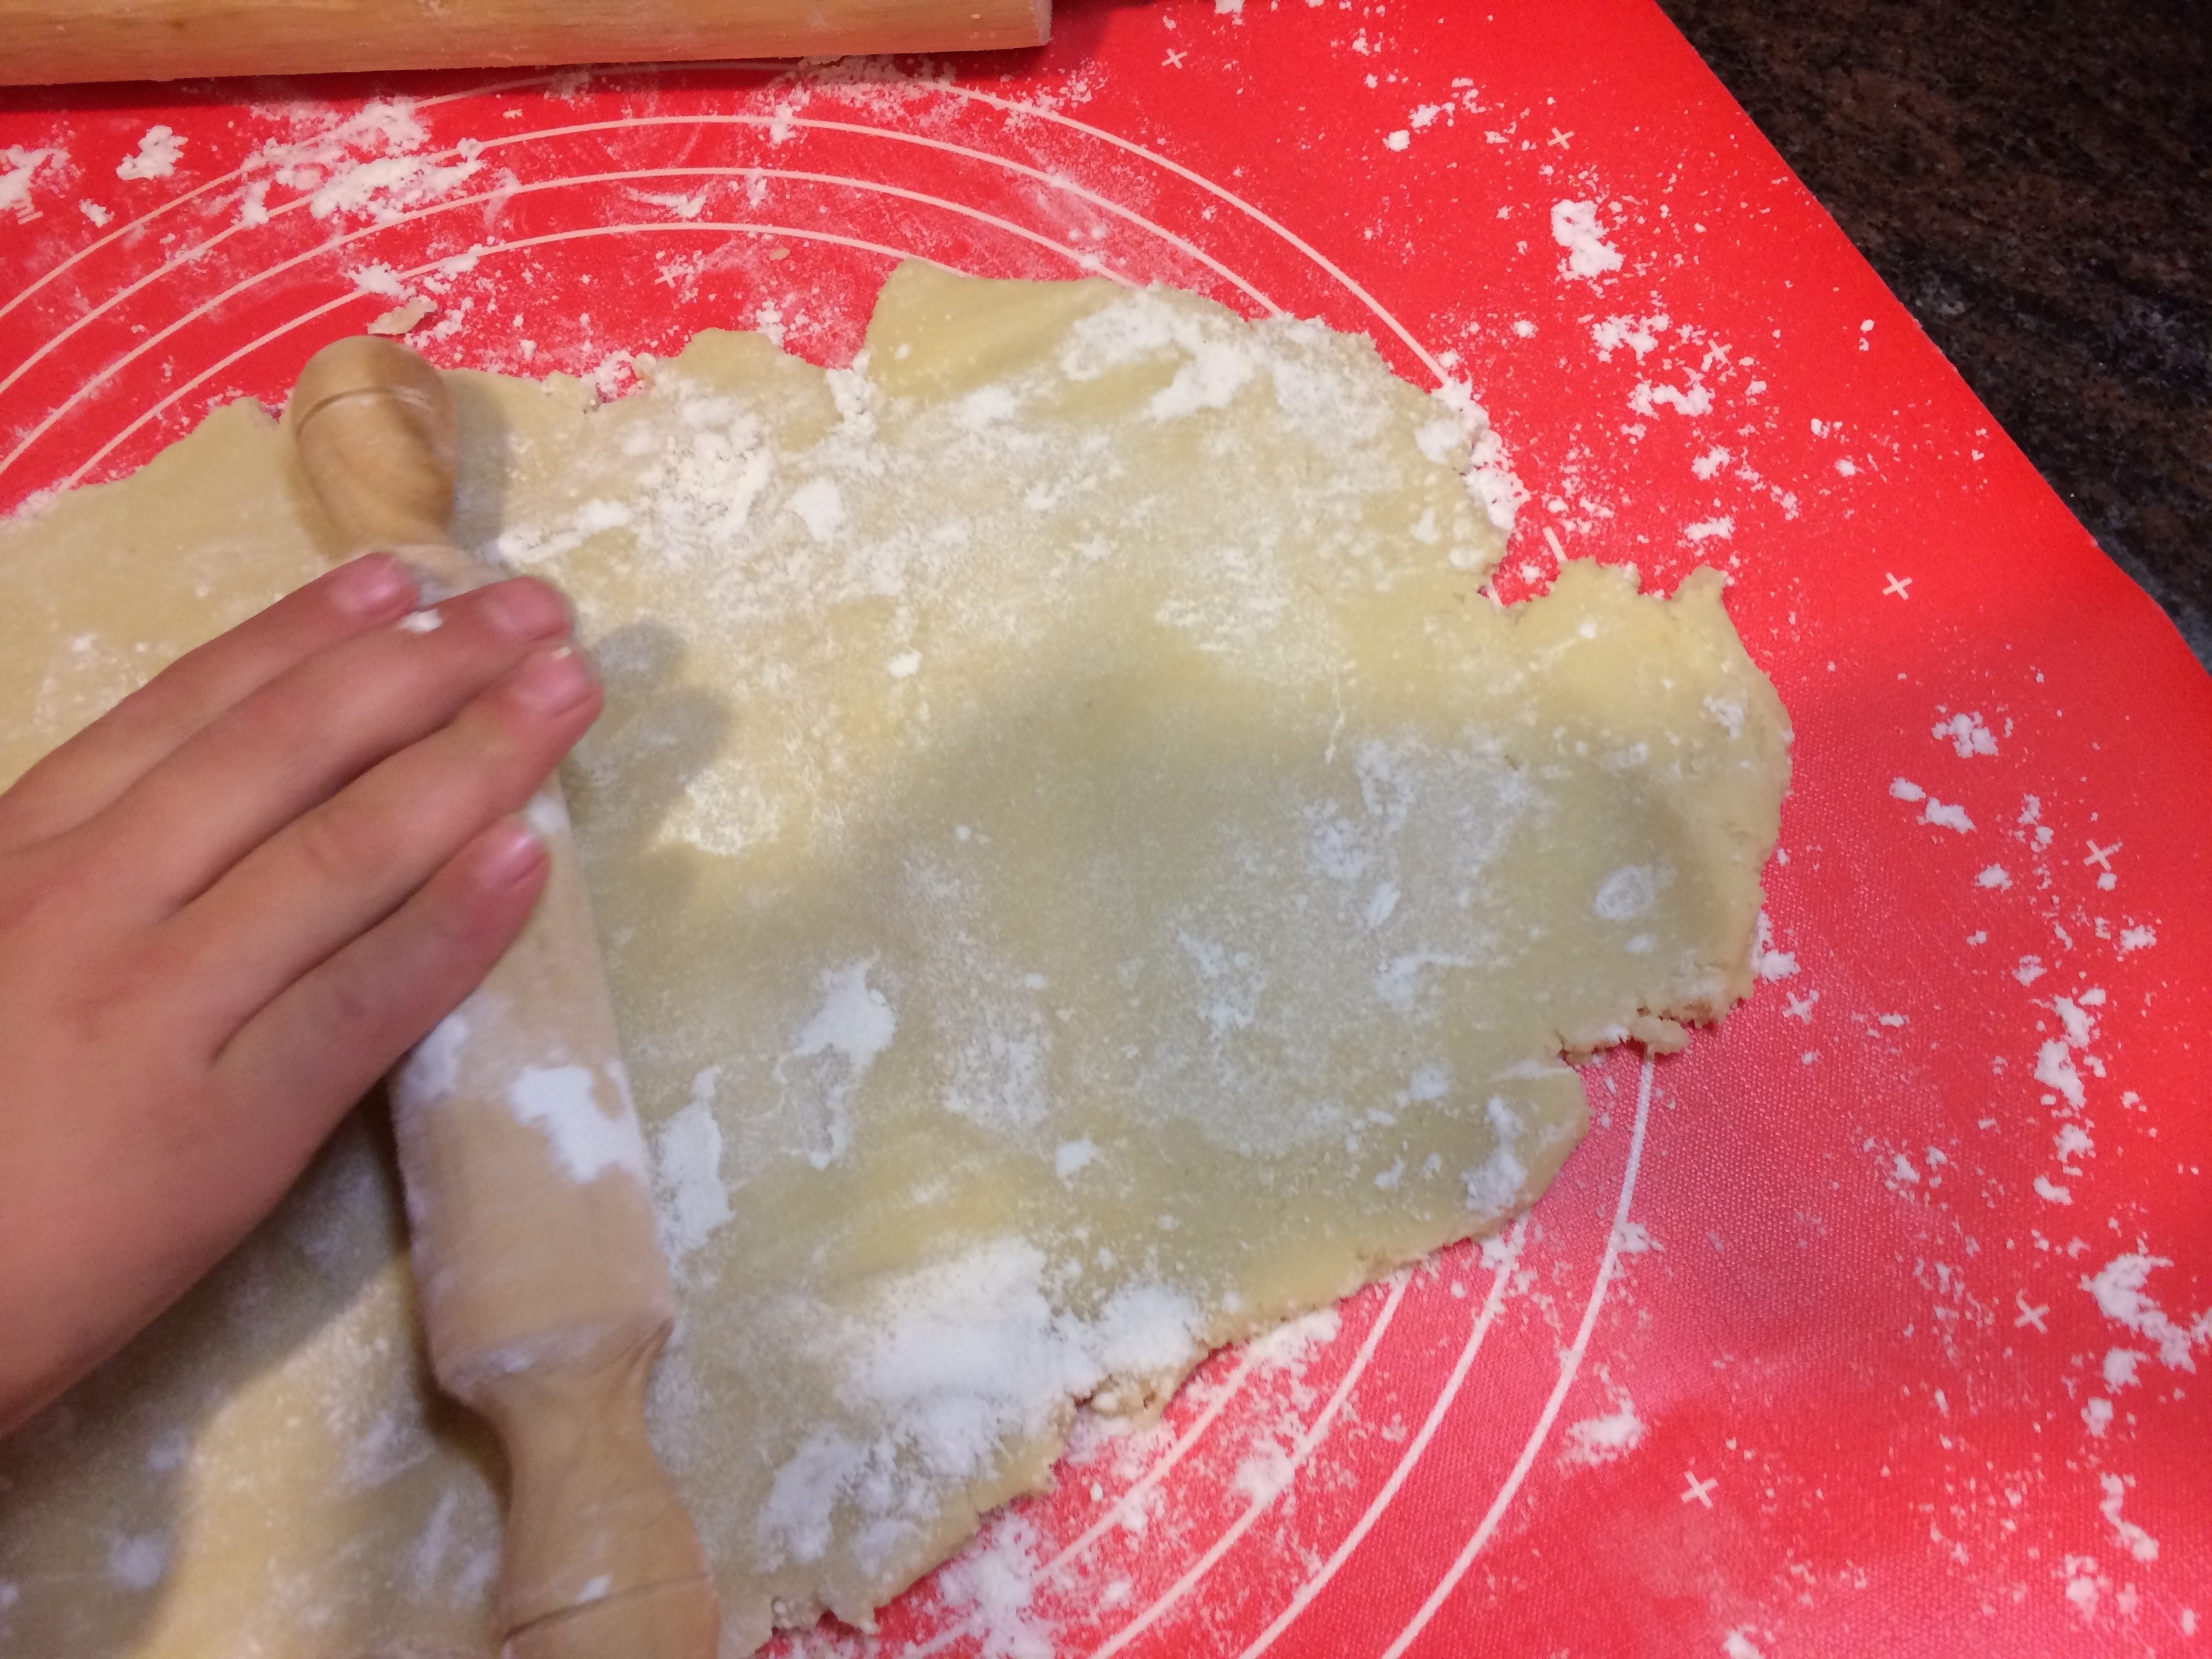 Rolling gluten-free dough